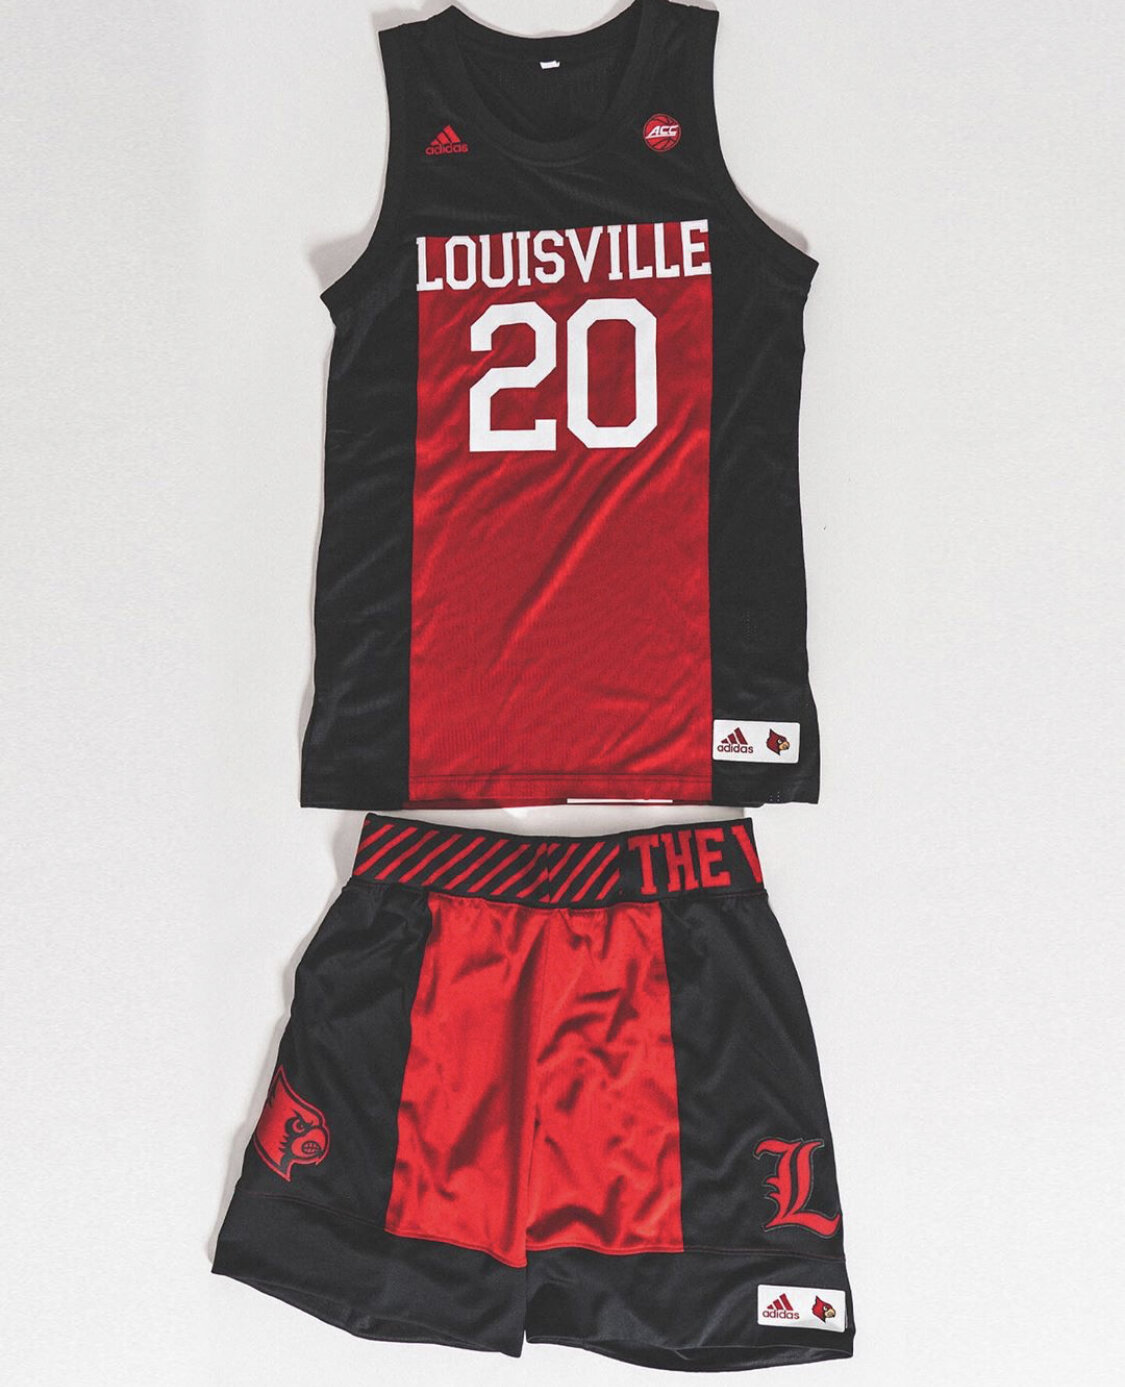 Uniforms for Louisville Basketball 